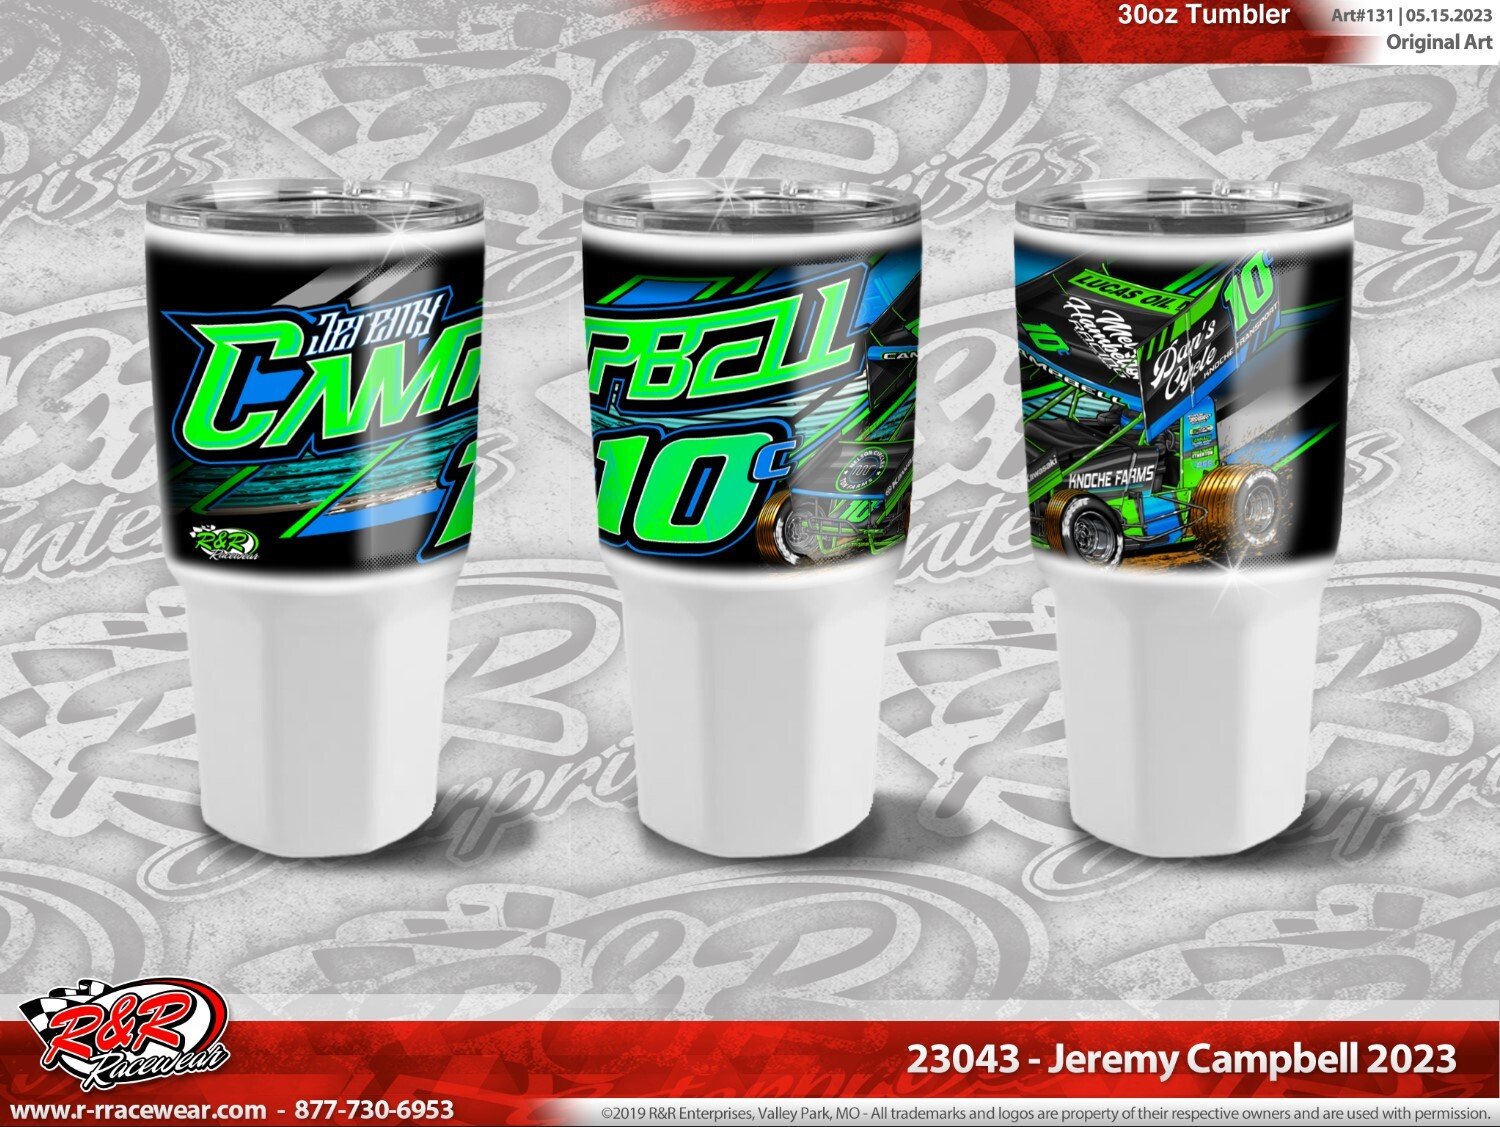 23043-Jeremy Campbell 2023-30oz Tumbler-Mockup Art.jpg